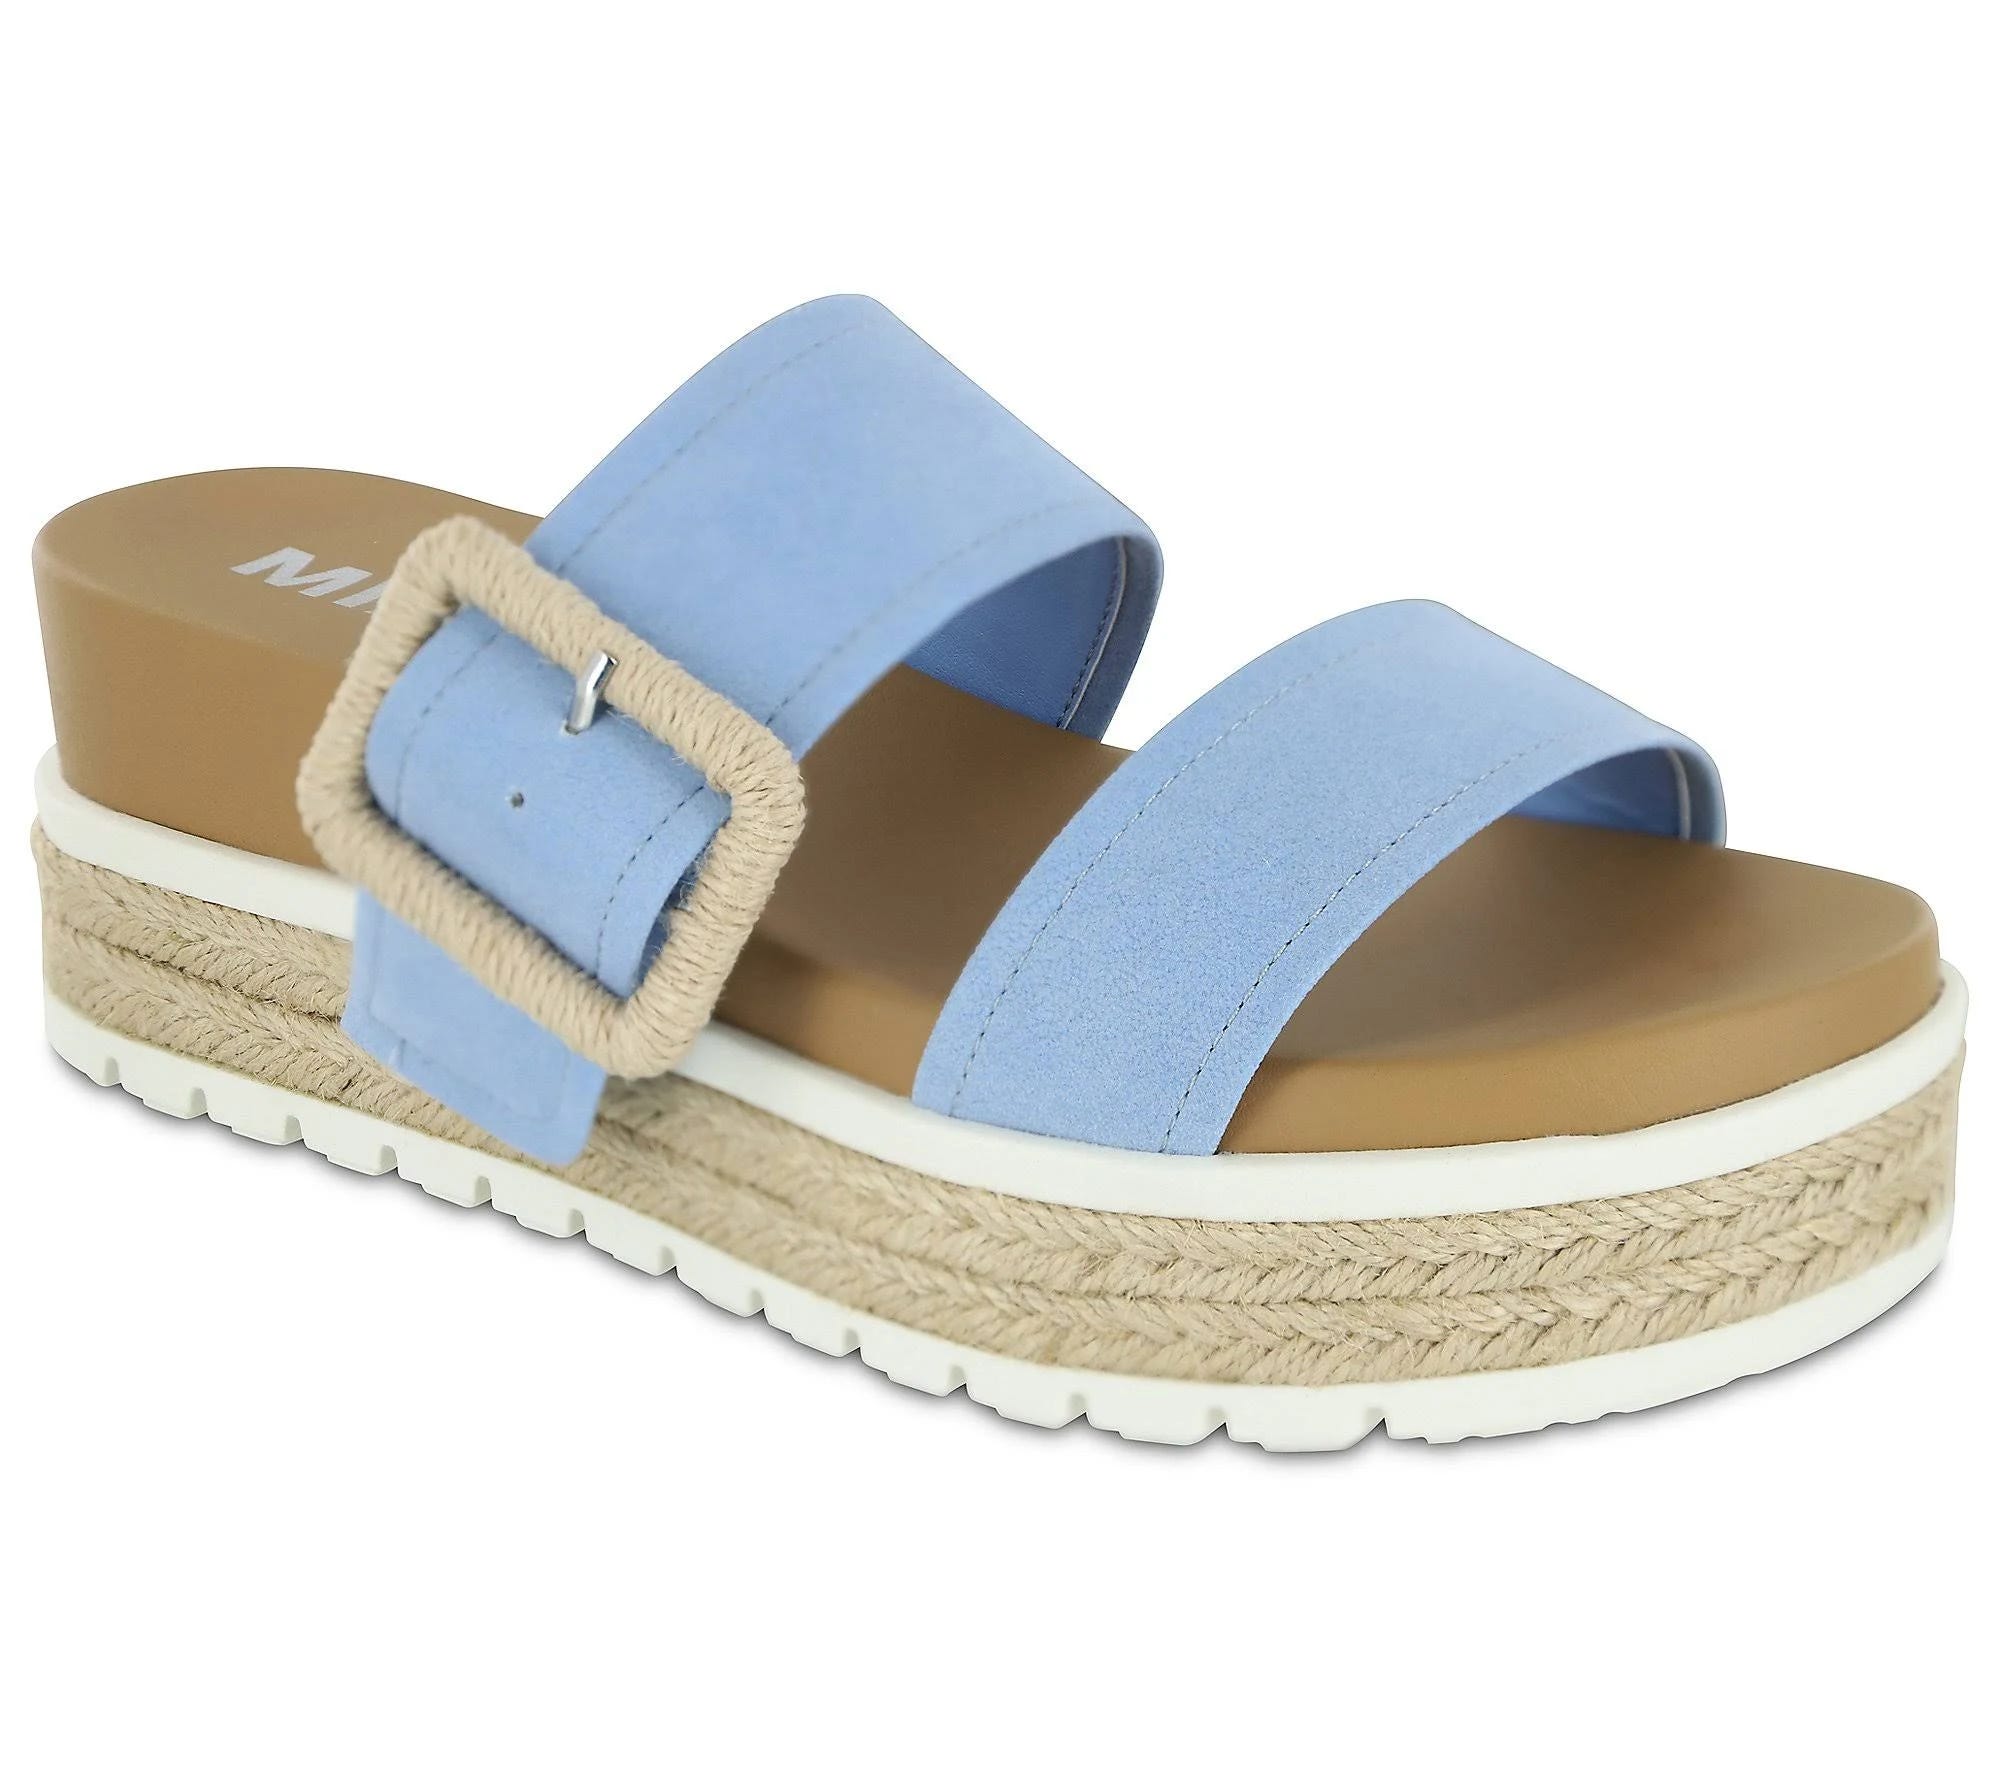 Mia Kenzy Light Blue Platform Sandal for Summer Walks | Image